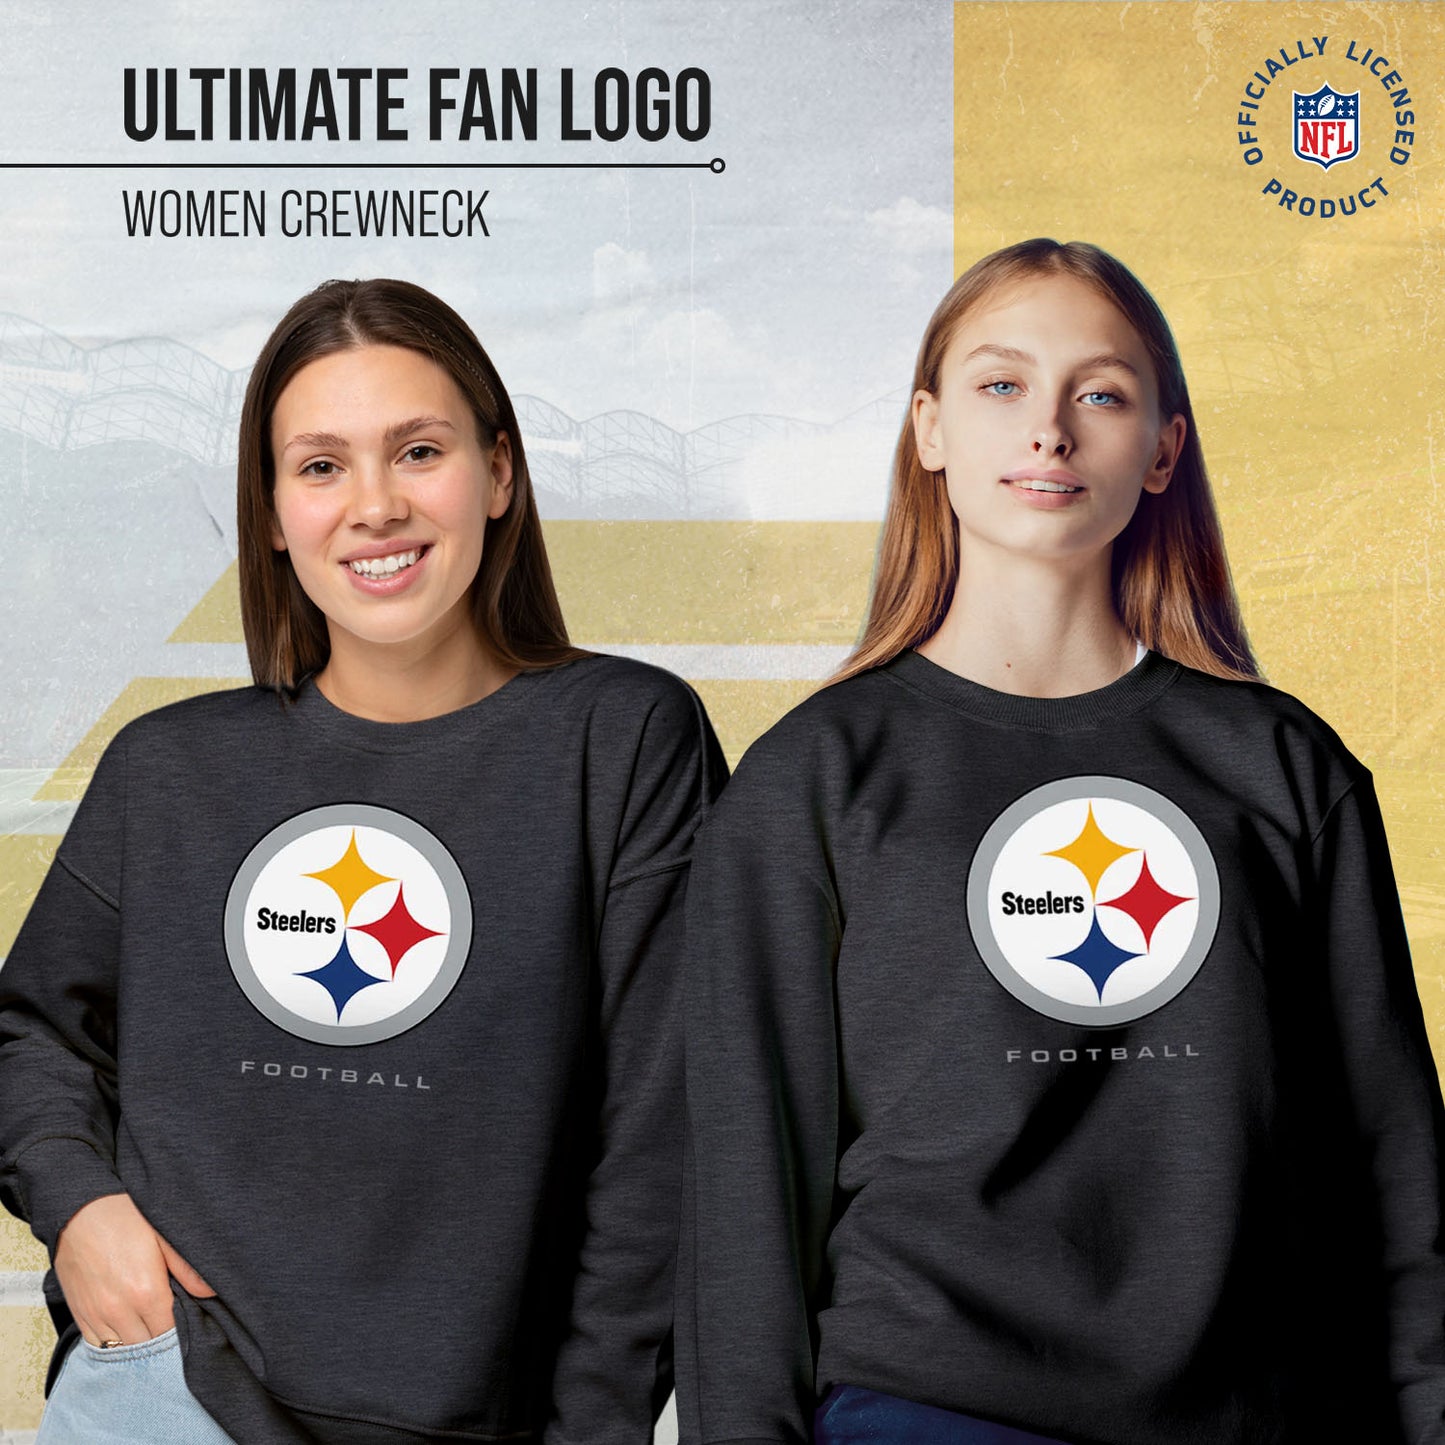 Pittsburgh Steelers Women's NFL Ultimate Fan Logo Slouchy Crewneck -Tagless Fleece Lightweight Pullover - Charcoal